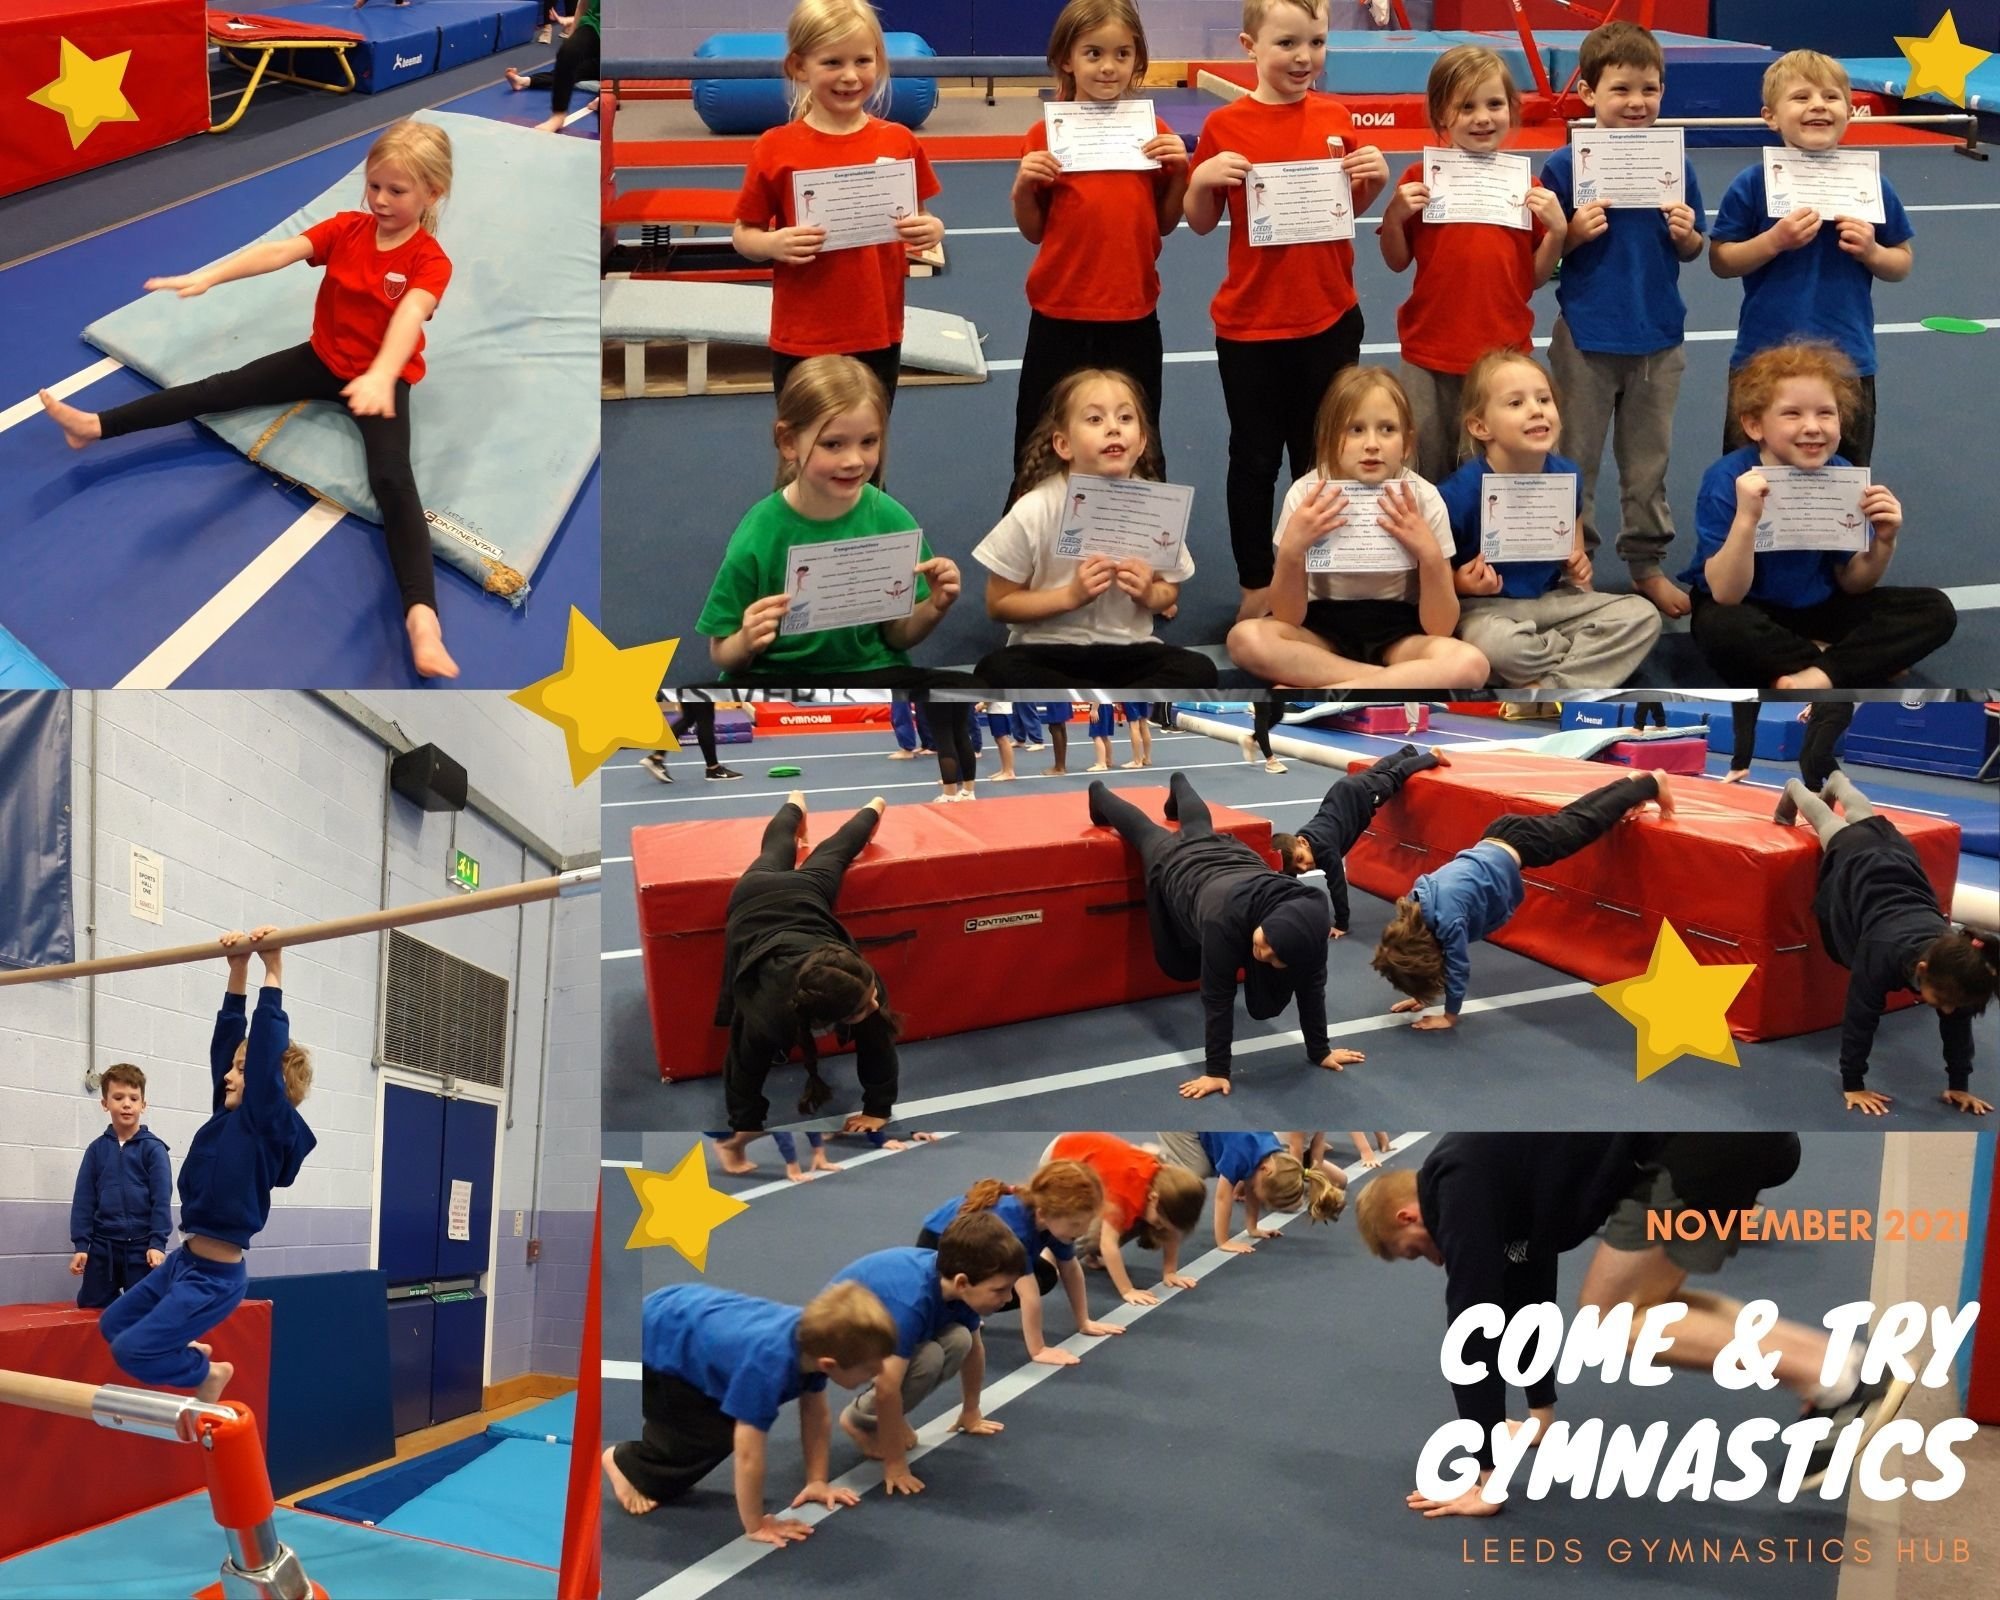 Children at a gymnastics event.